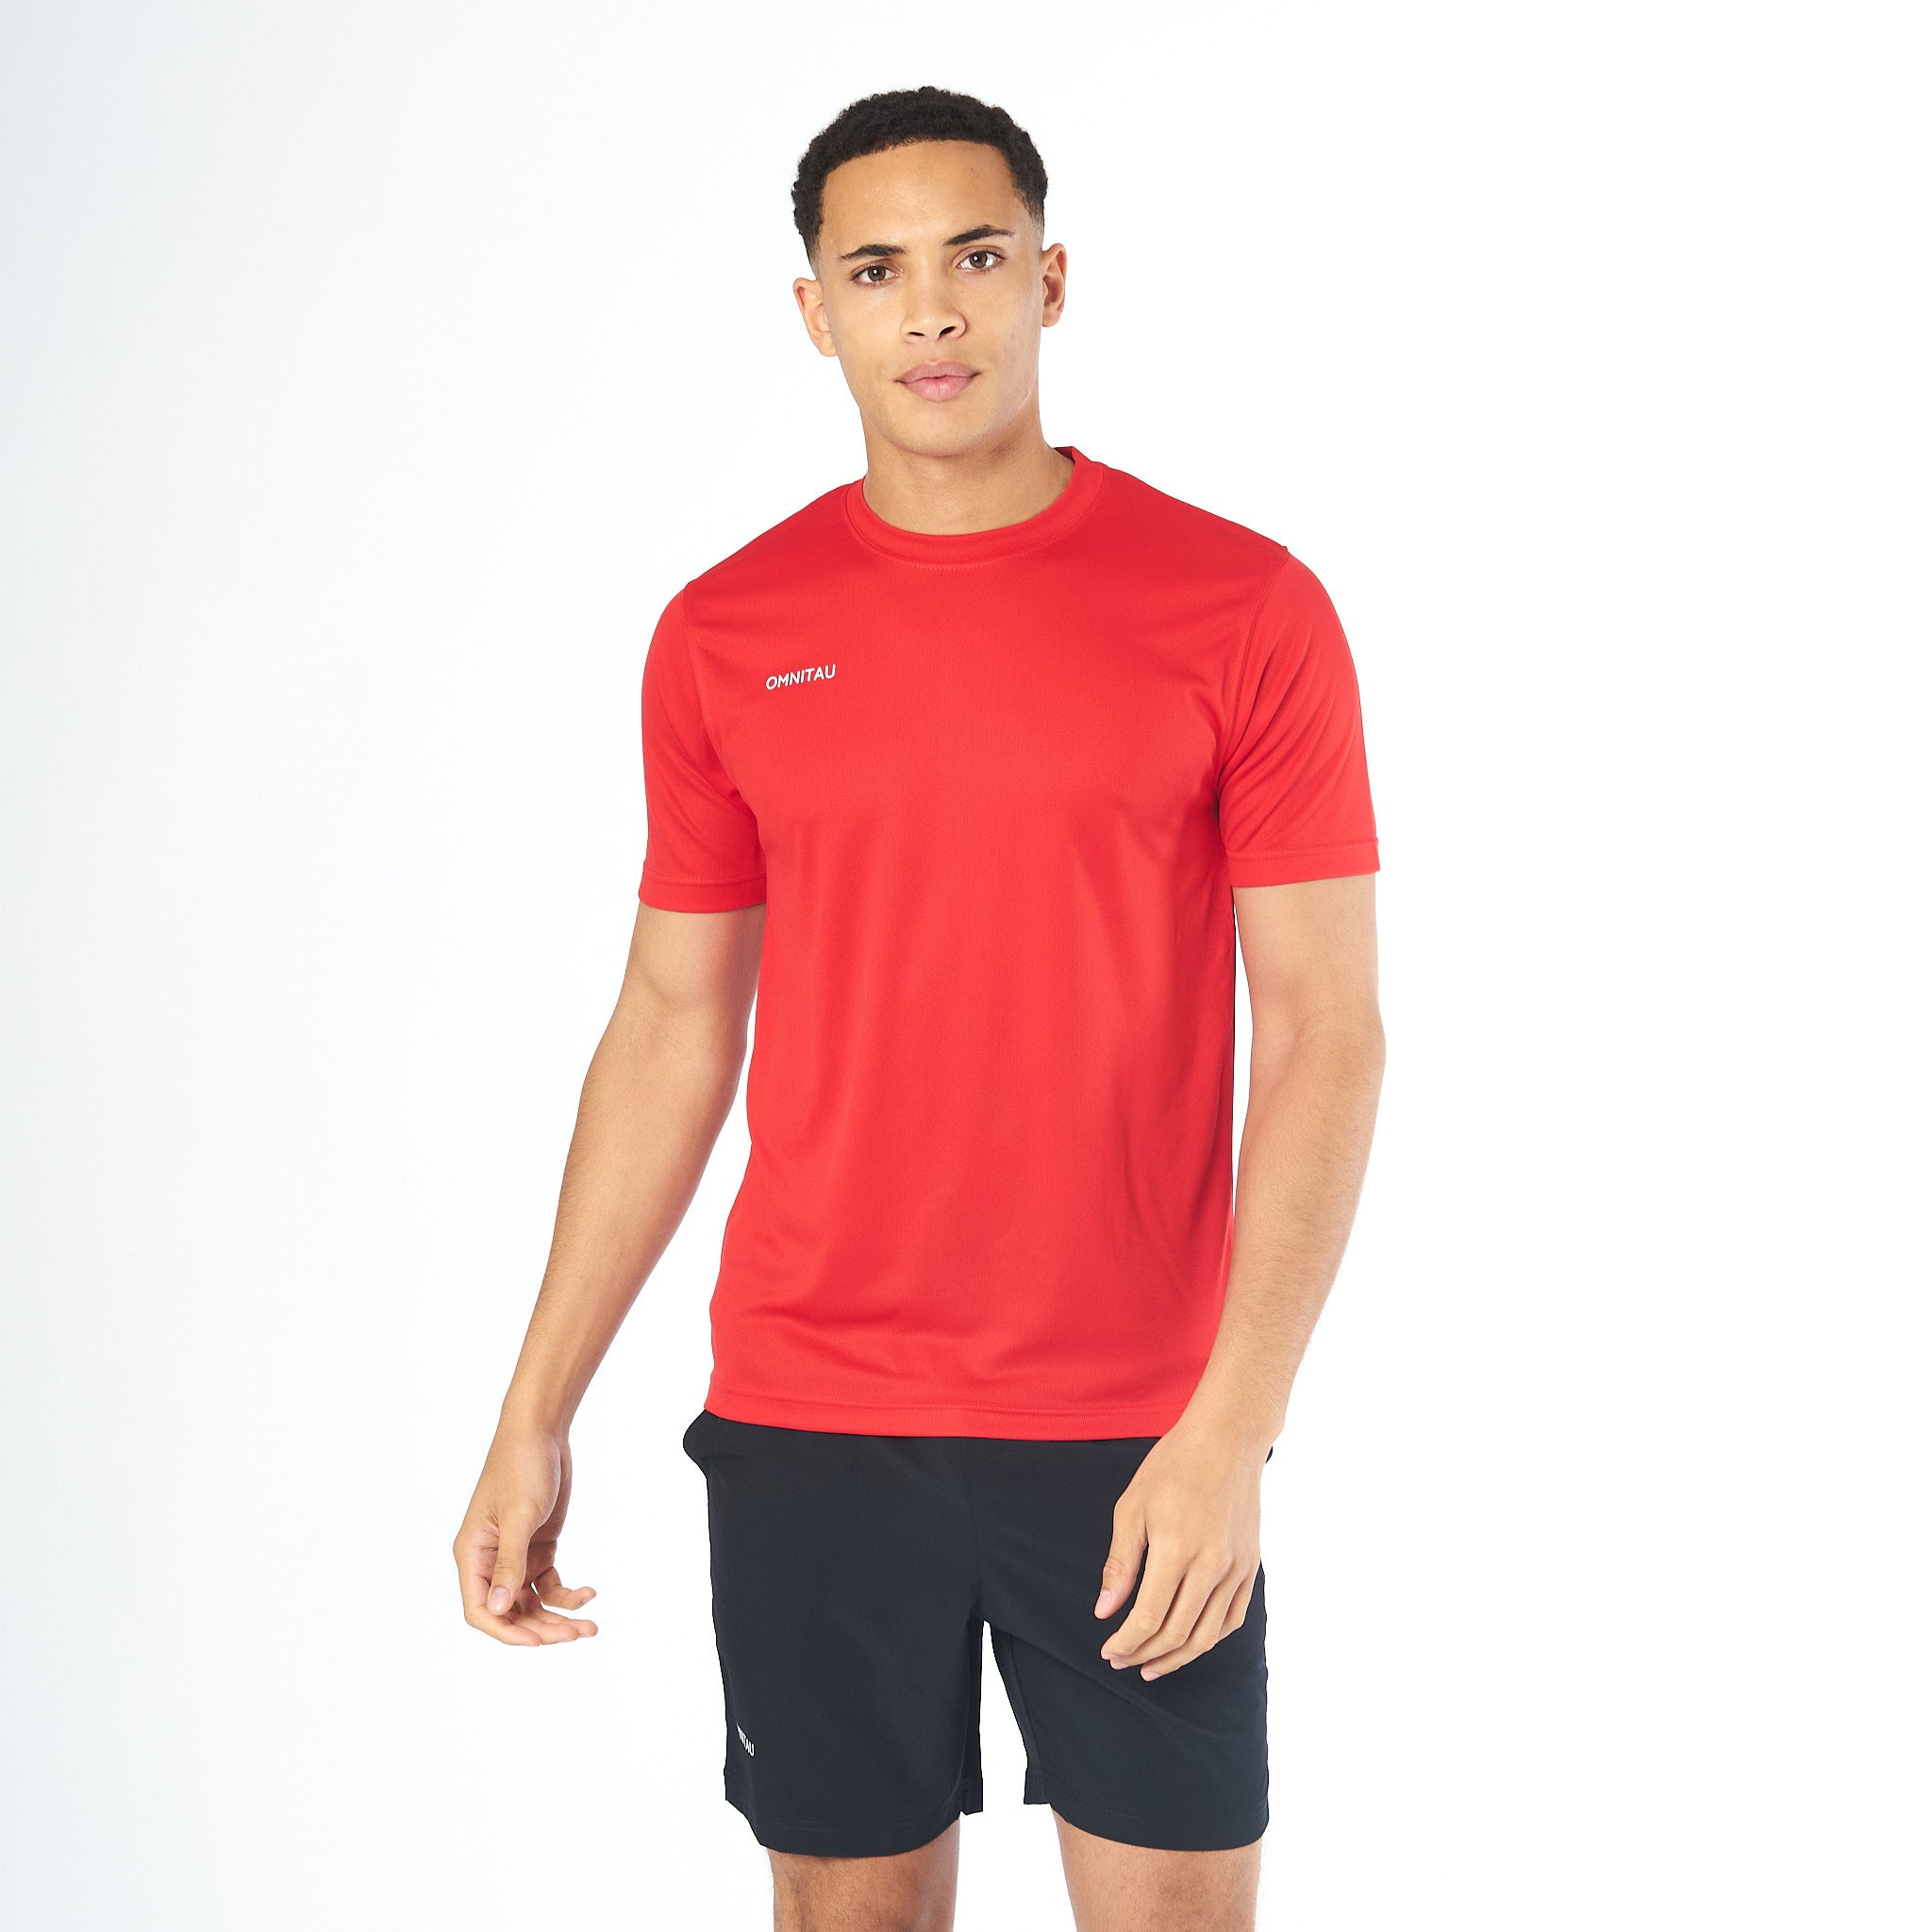 Omnitau Men's Team Sports Core Football Shirt - Red